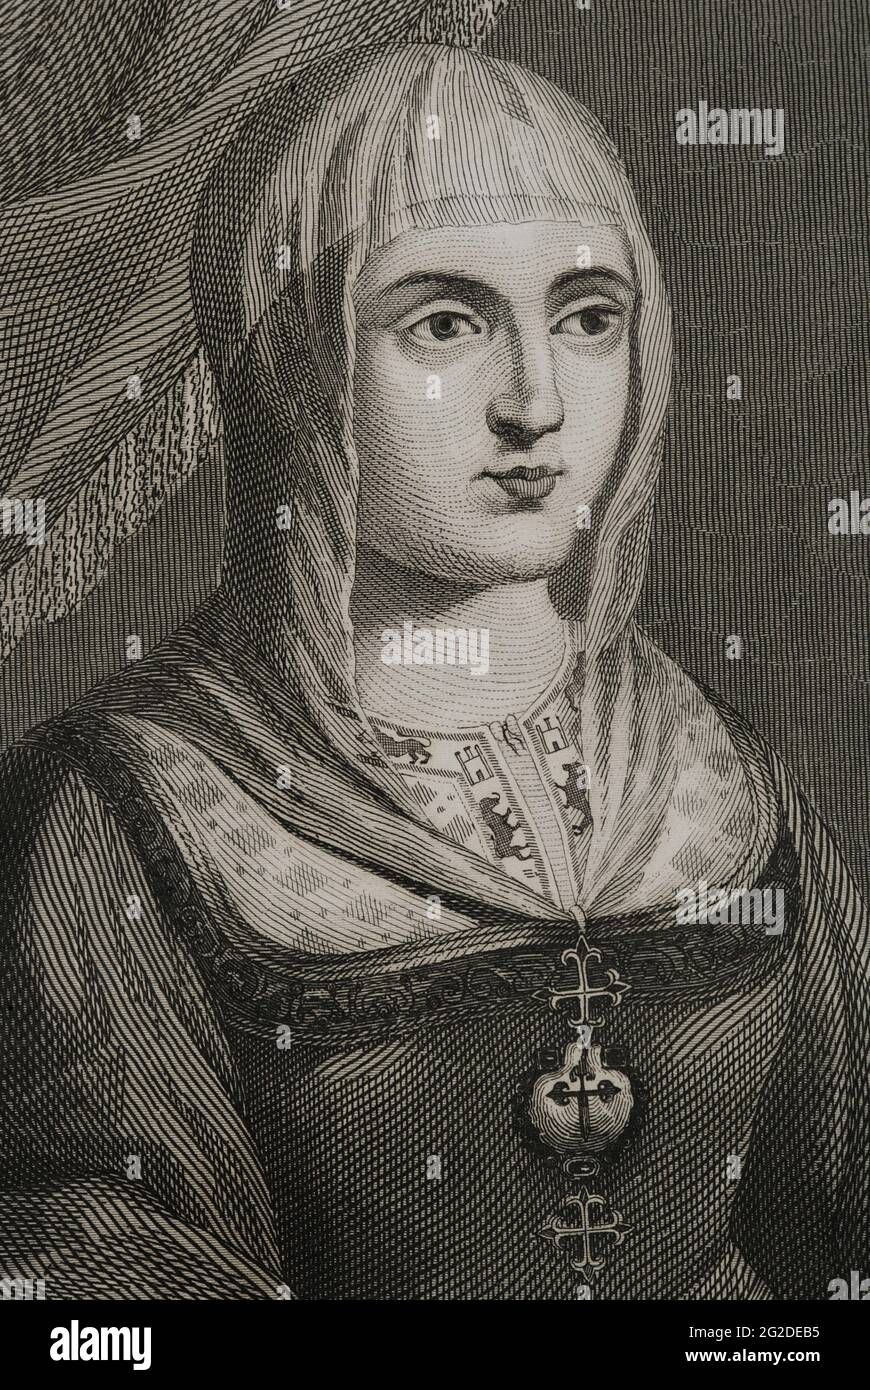 Isabella I (1451-1504). Queen of Castile (1474-1504). Queen consort of Aragon for her marriage to Ferdinand II of Aragon. Portrait, detail. Engraving by Antonio Roca Sallent. Las Glorias Nacionales, 1853. Stock Photo